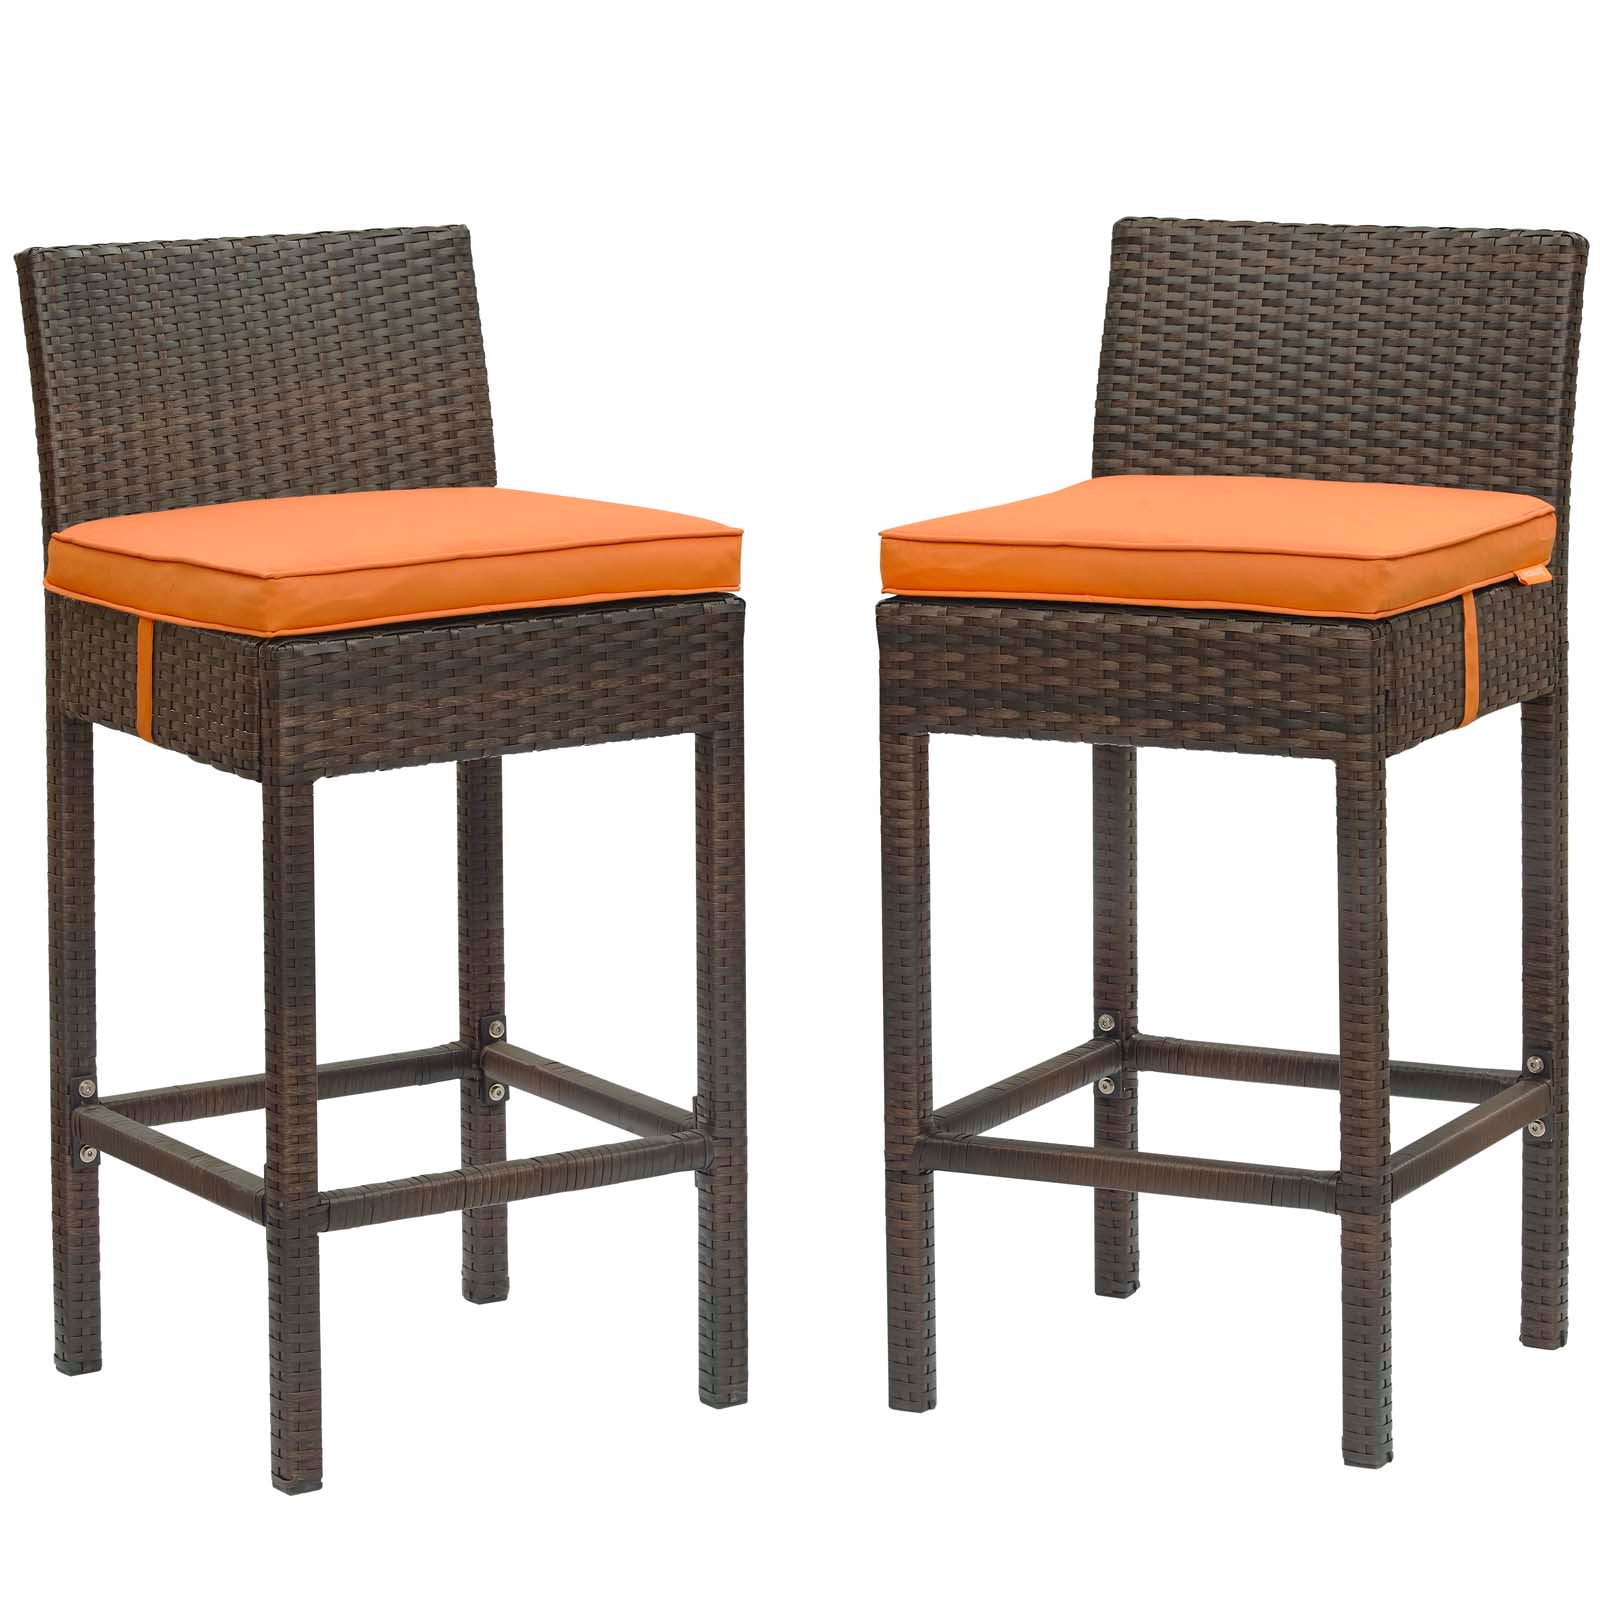 Modway Outdoor Barstools - Conduit Bar Stool Outdoor Patio Wicker Rattan Set of 2 Brown Orange